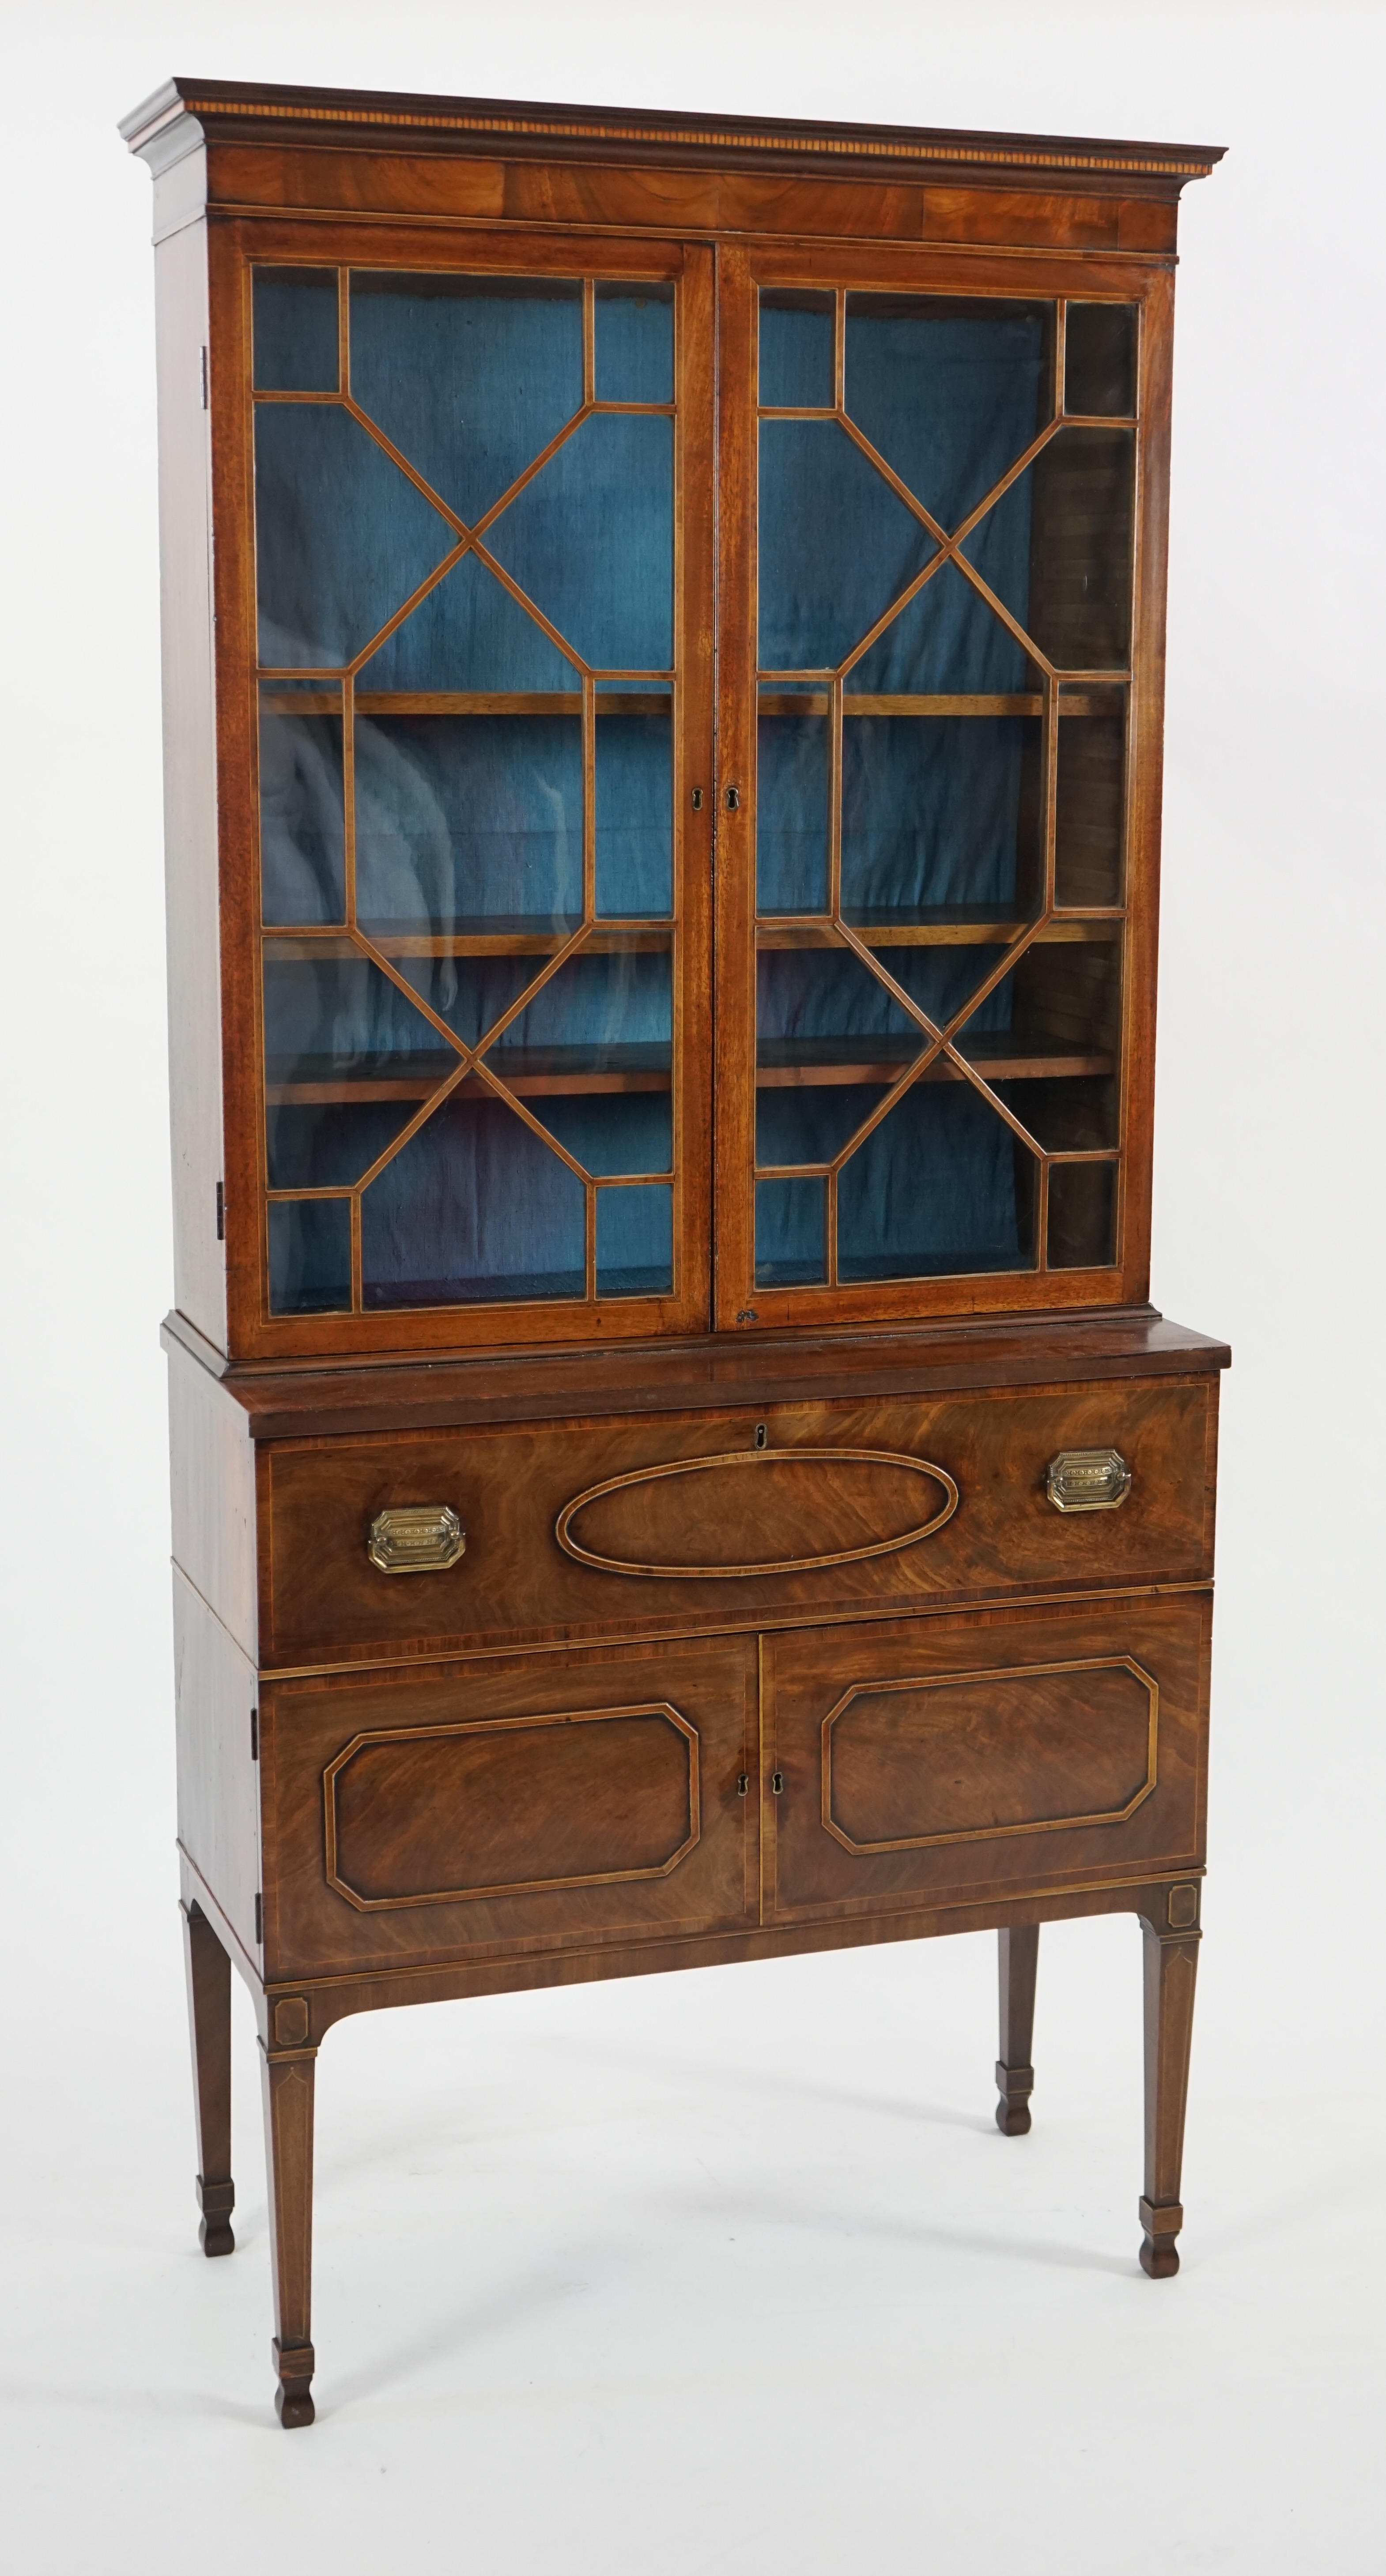 A late George III mahogany secretaire bookcase